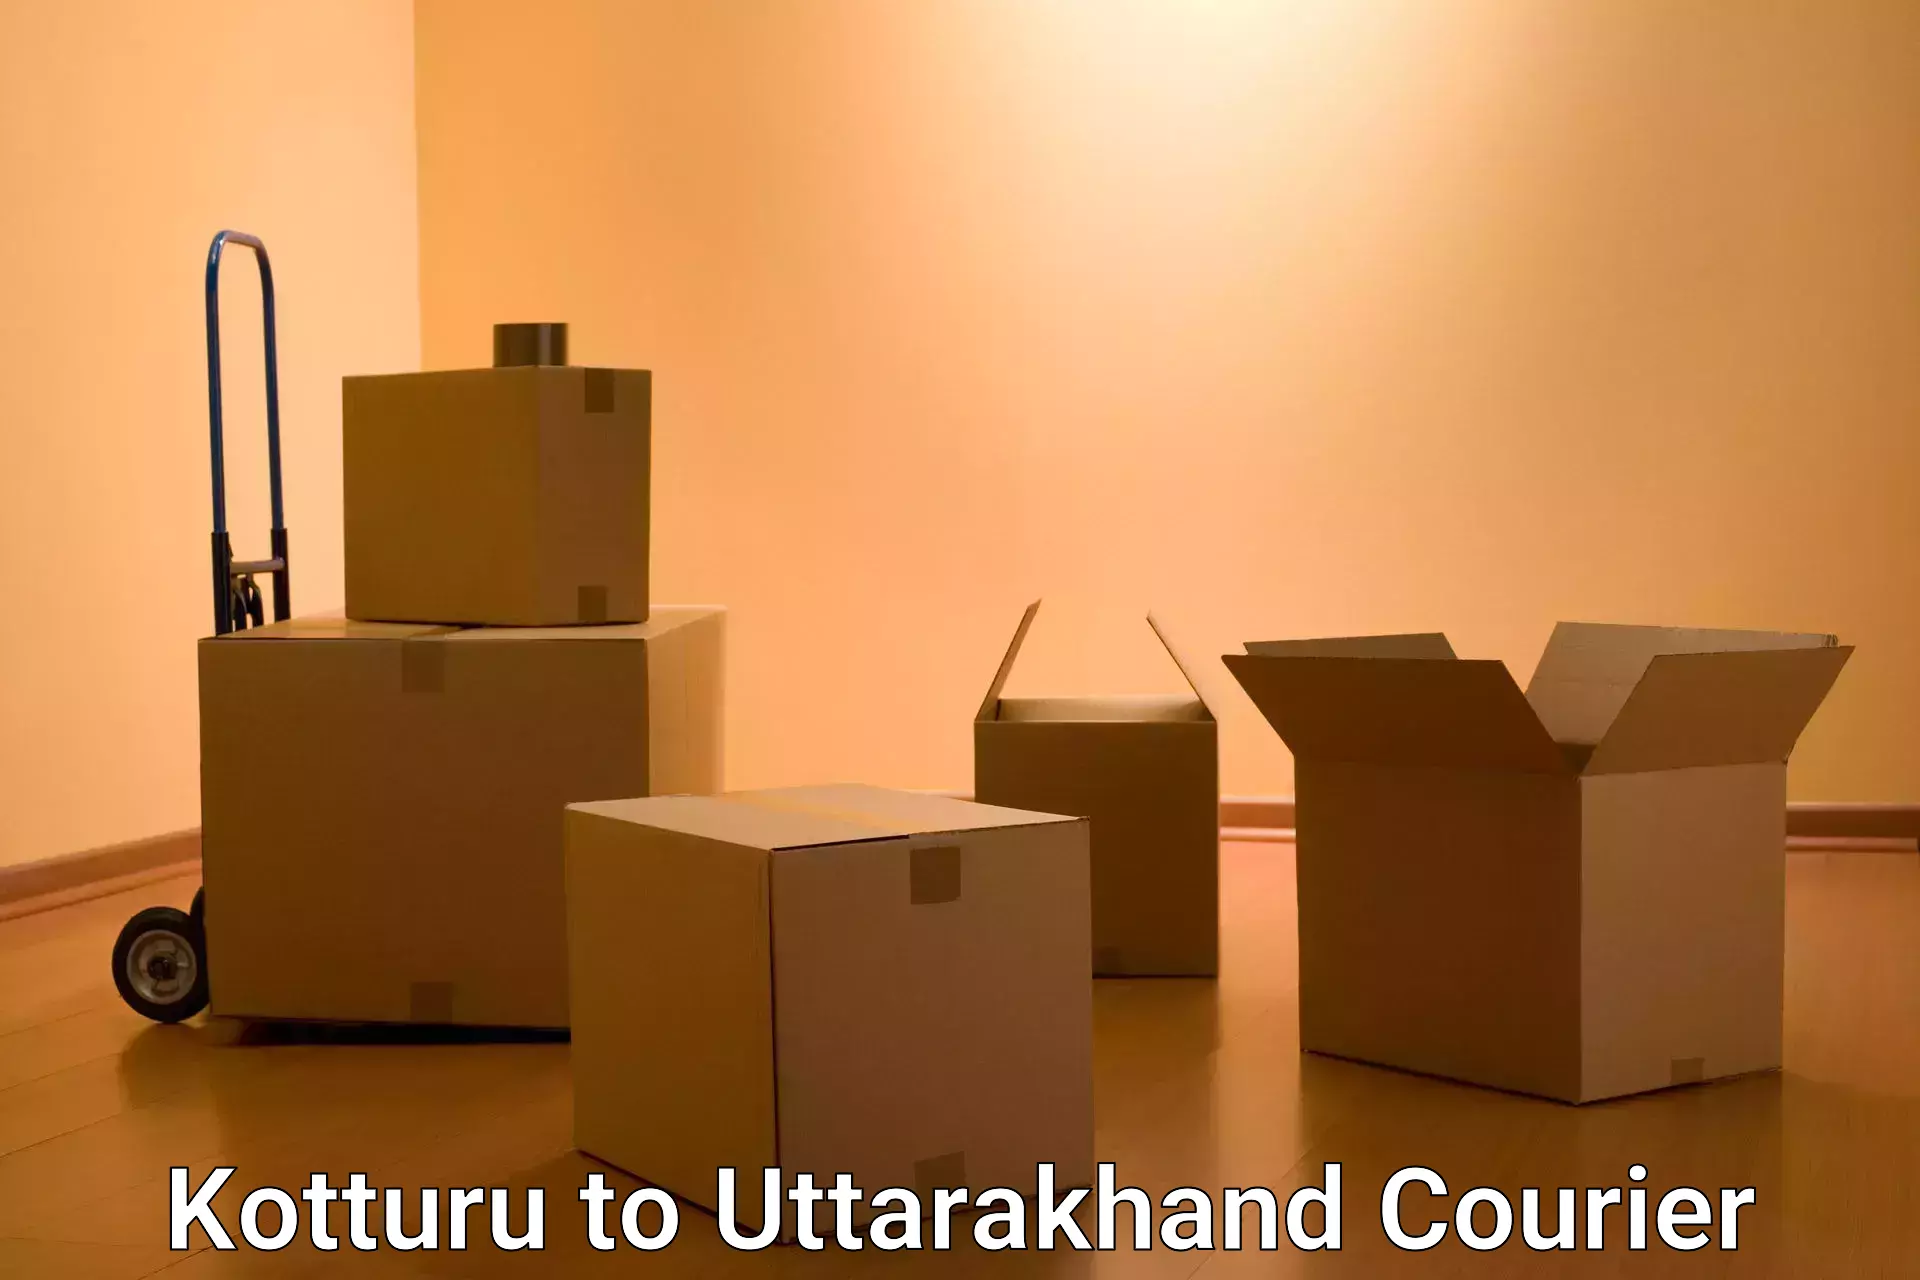 Express delivery network Kotturu to Uttarakhand